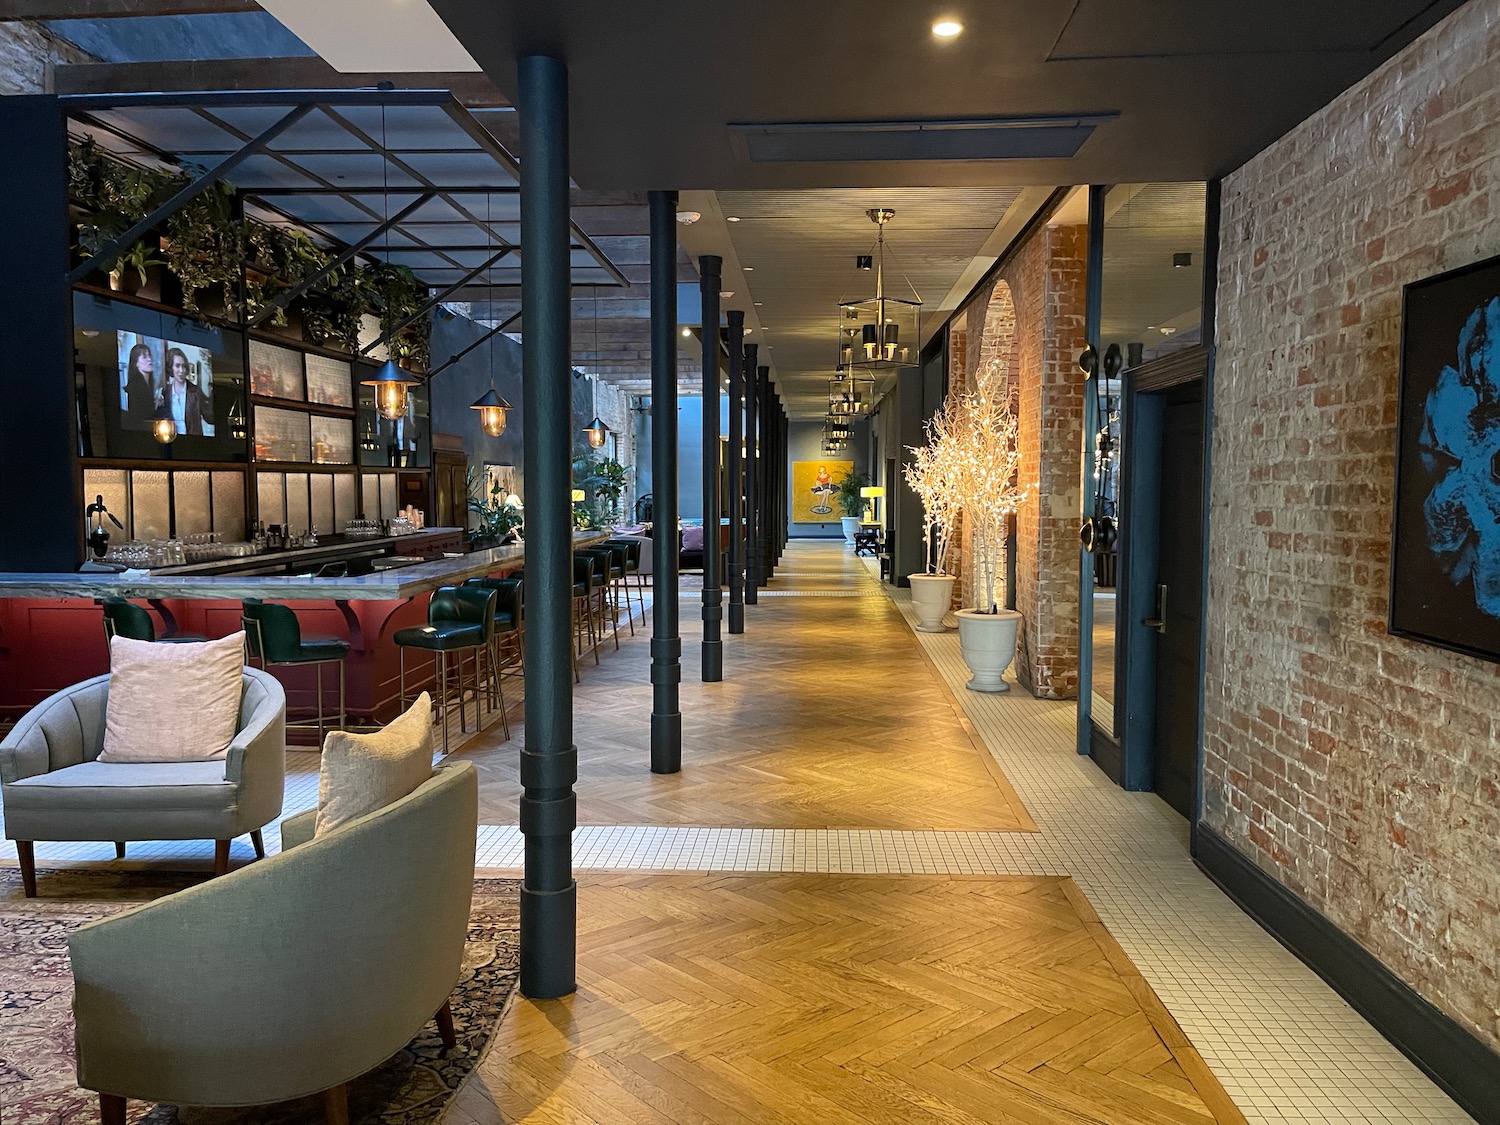 a long hallway with brick walls and a bar